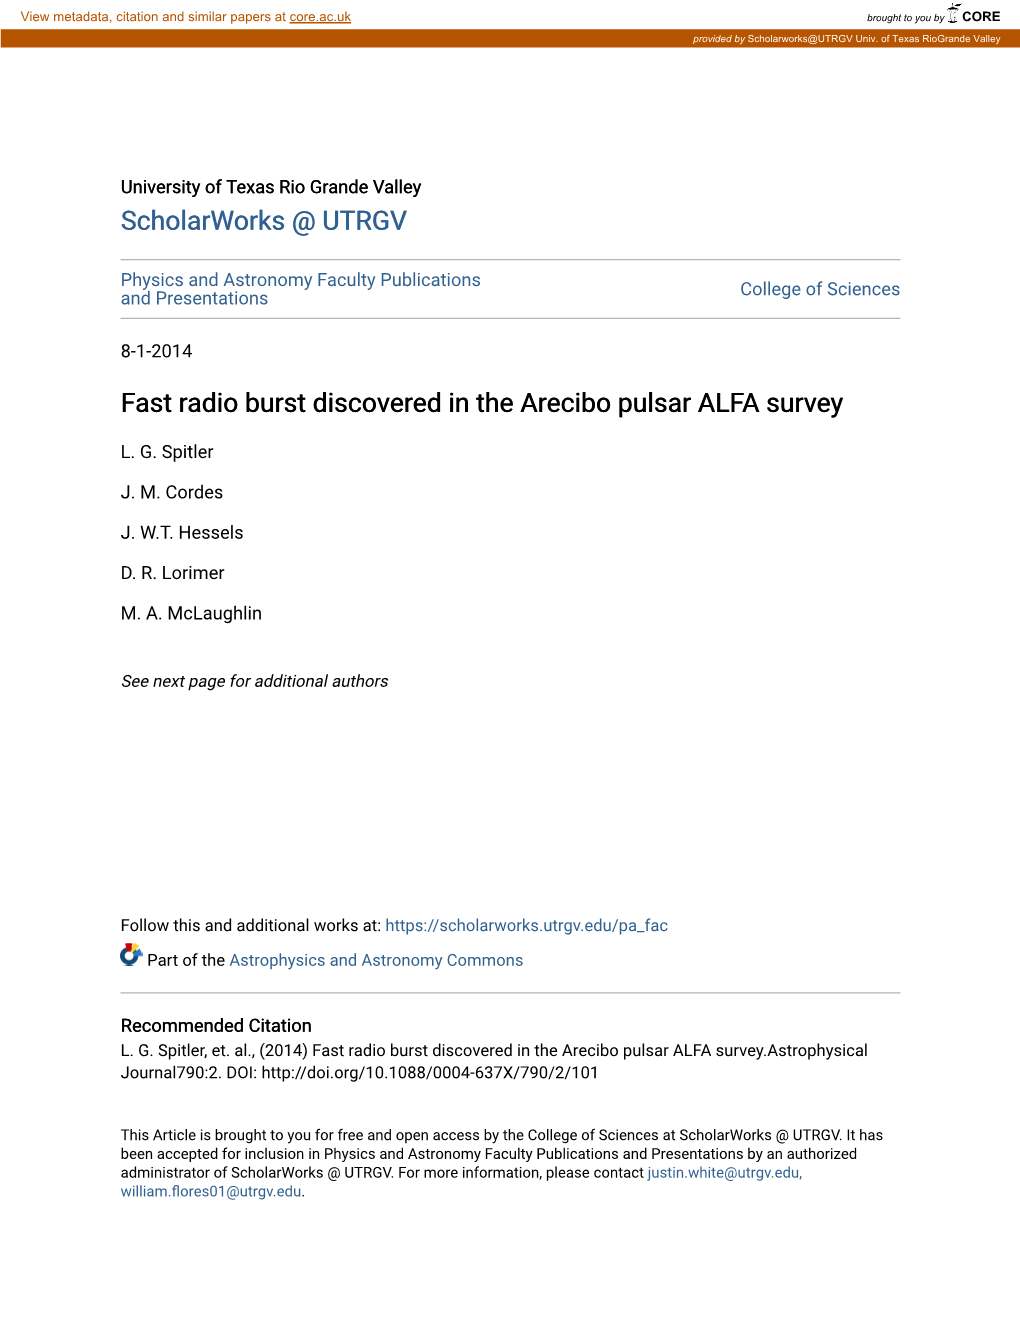 Fast Radio Burst Discovered in the Arecibo Pulsar ALFA Survey